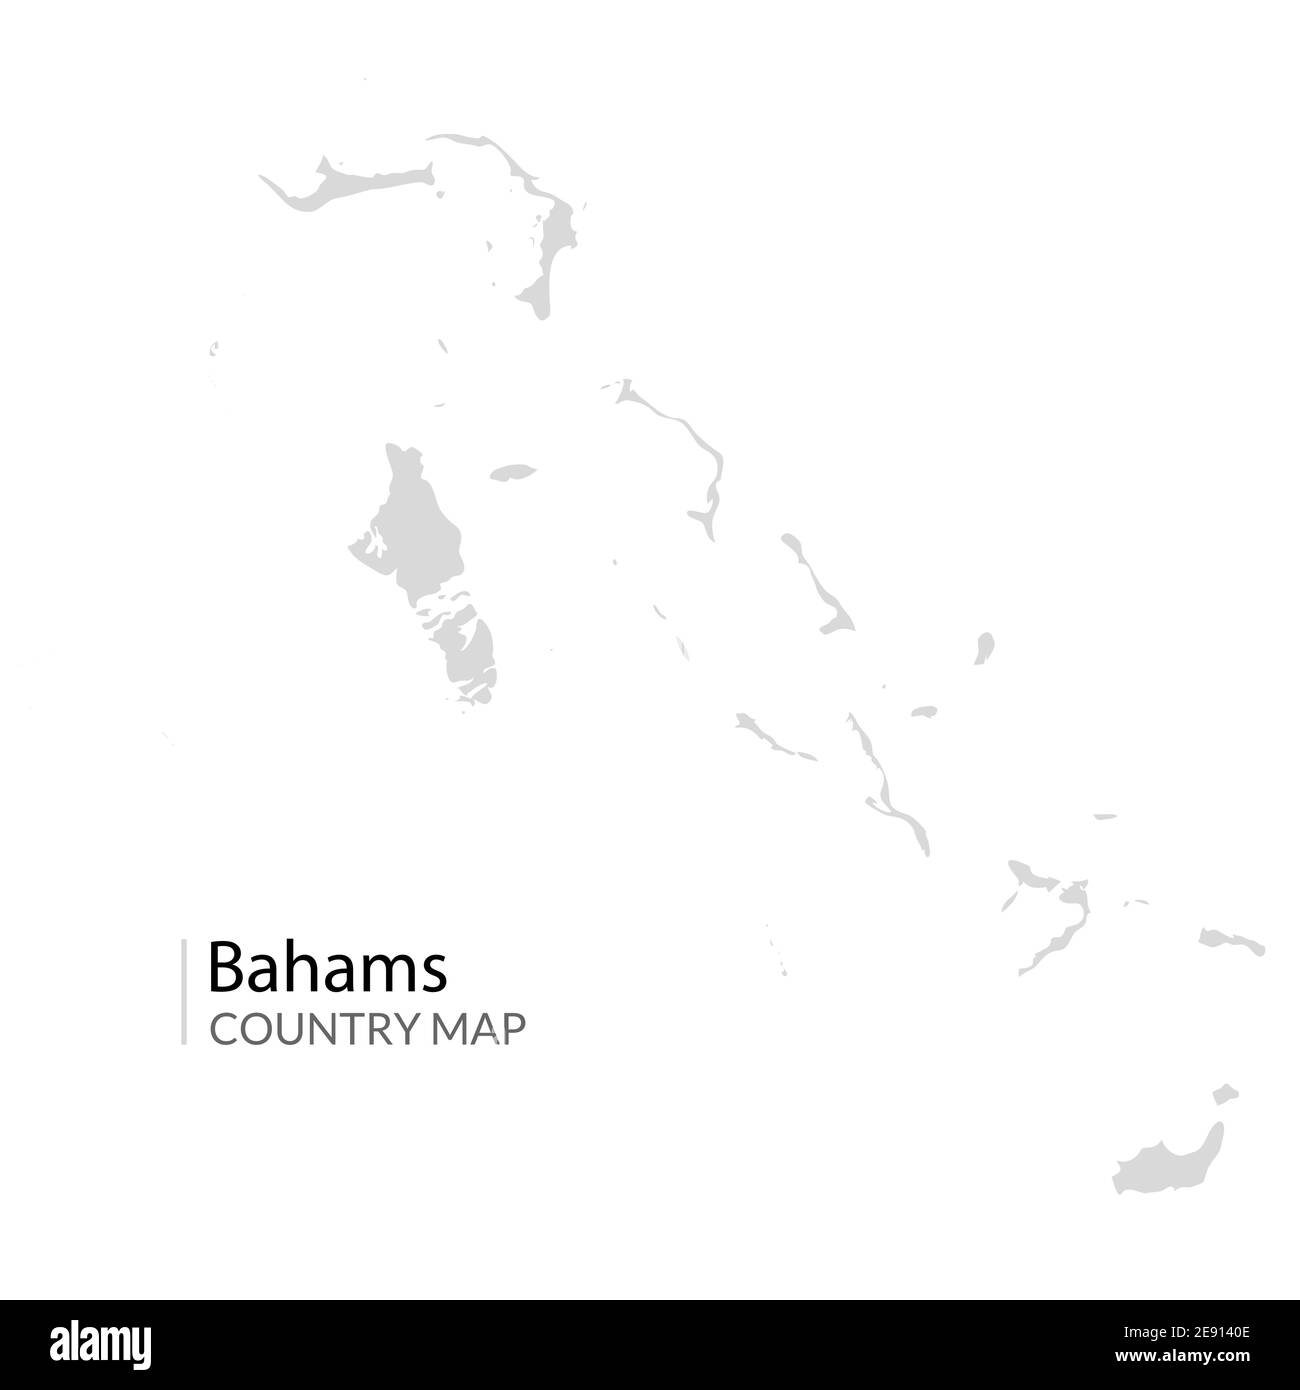 Bahams vector map. Nassau caribbean island country. Bahama map illustration Stock Vector